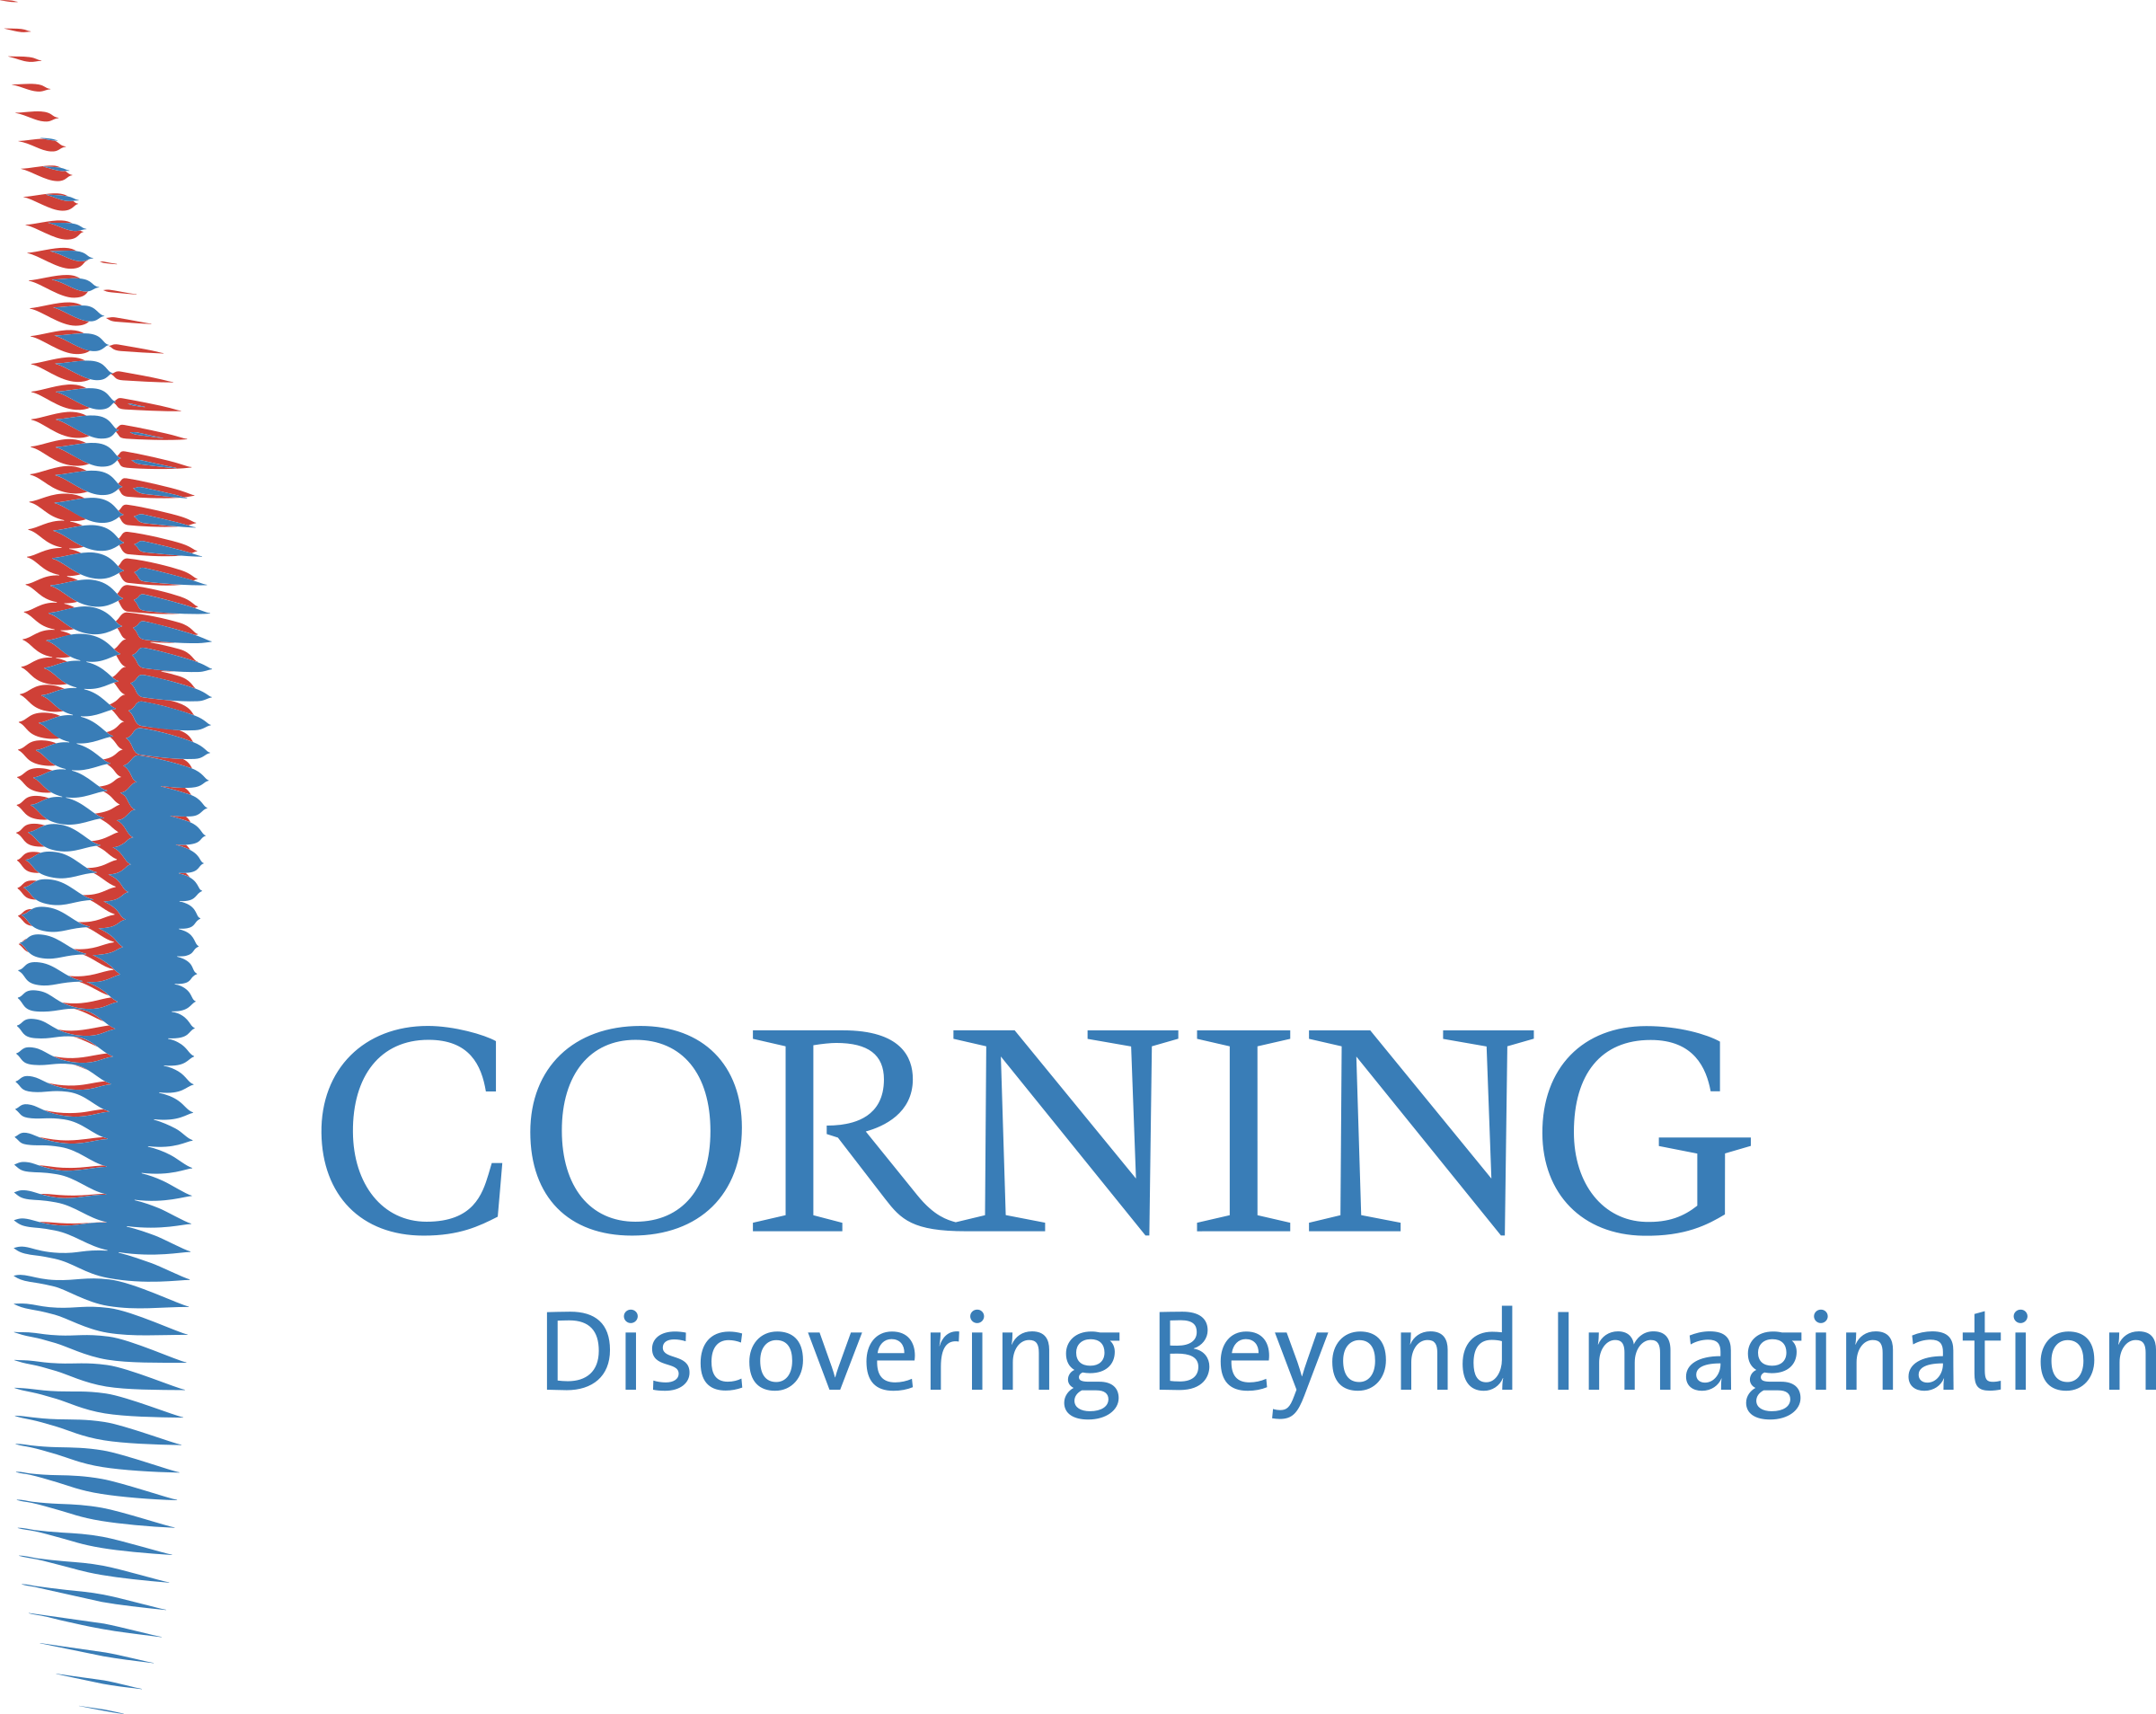 Corning Logo - Corning Logo PNG Transparent & SVG Vector - Freebie Supply